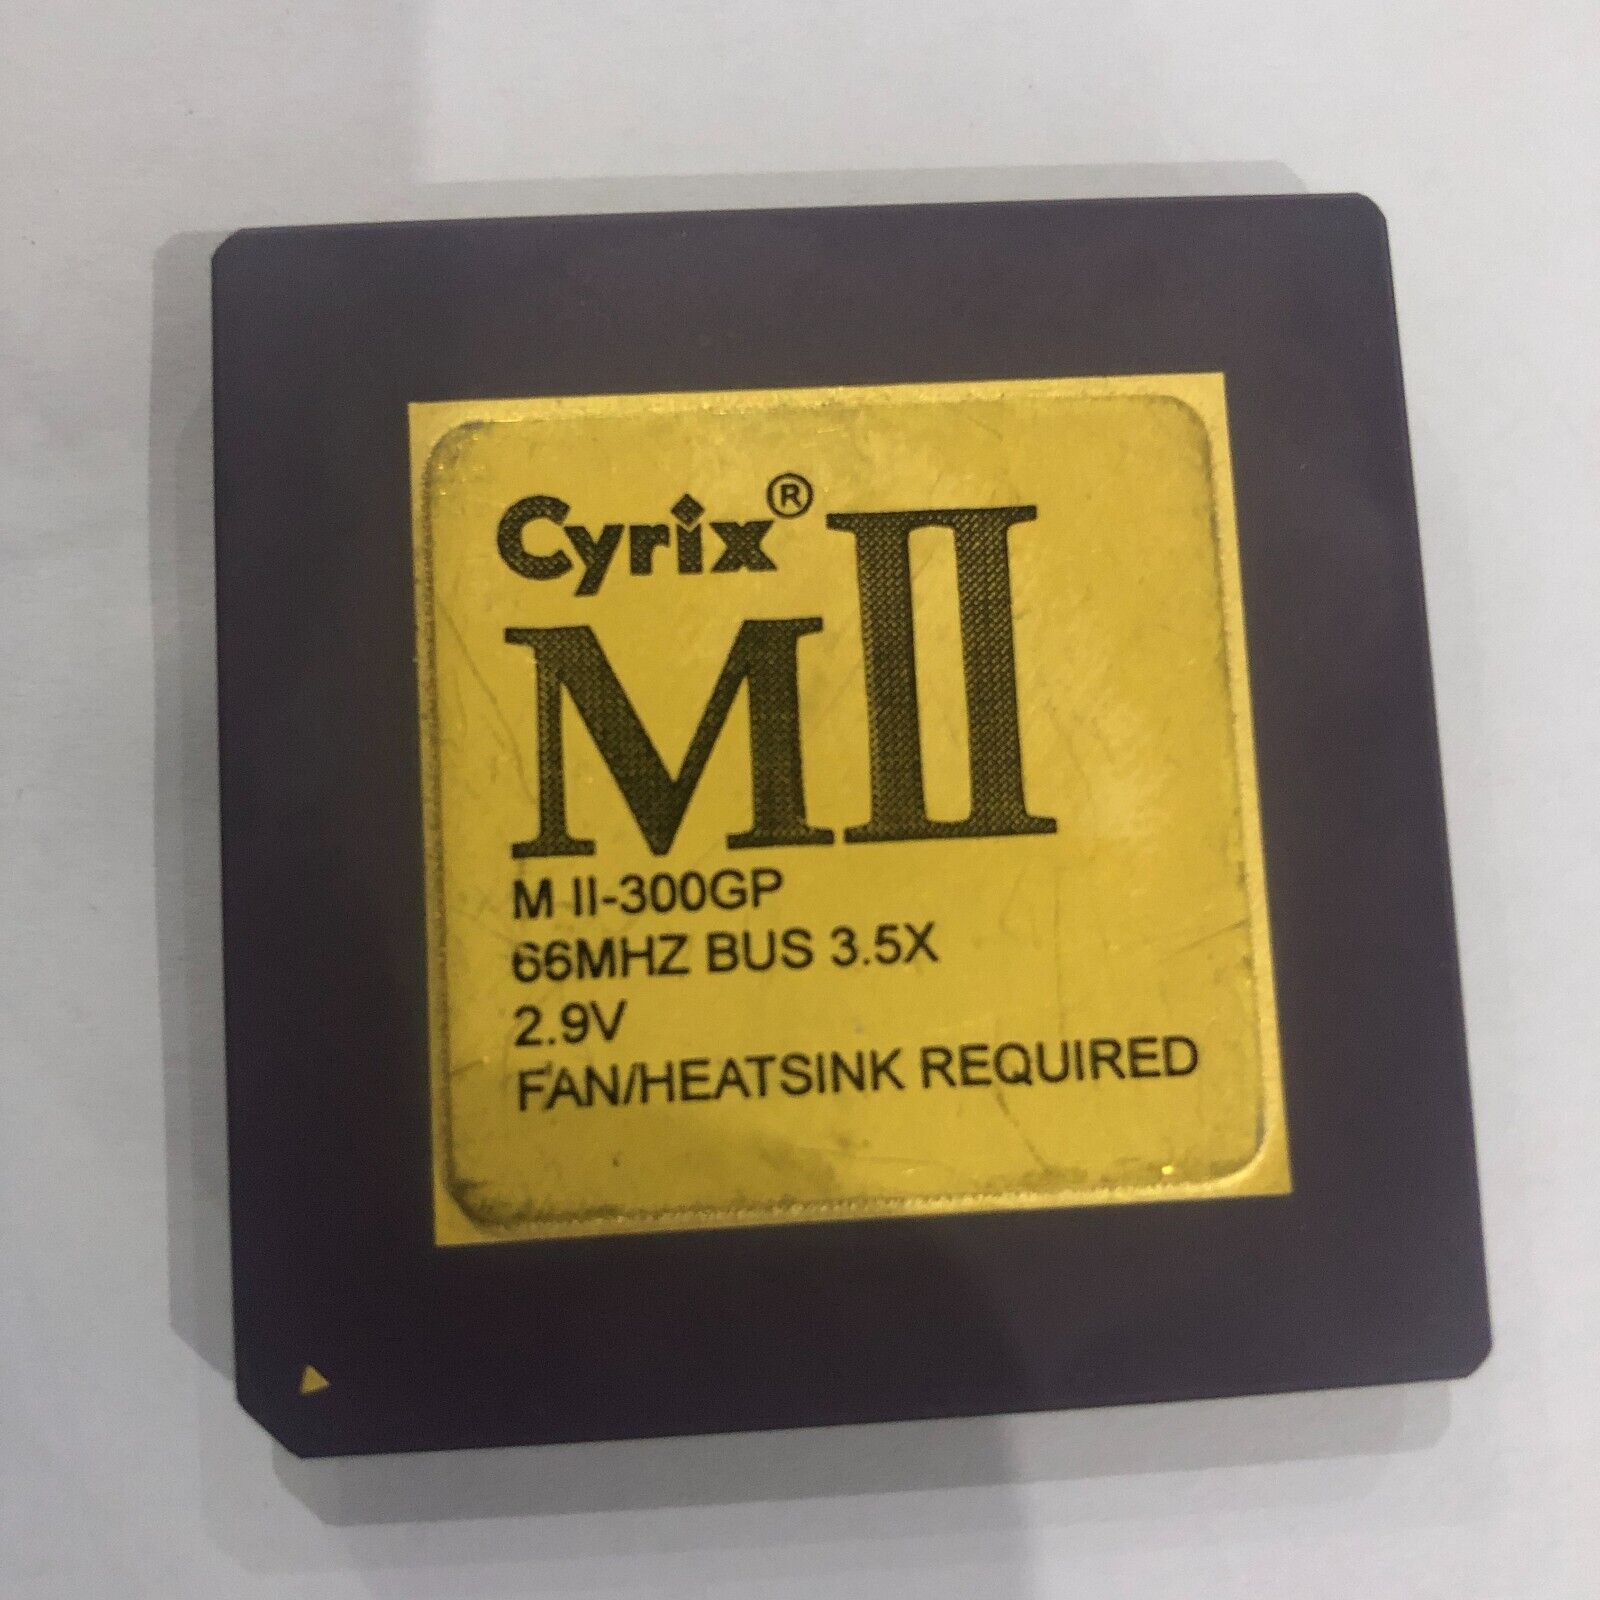 1x Cyrix M II 300GP 66 MHZ Bus 3.5X 2.9V Ceramic CPU 